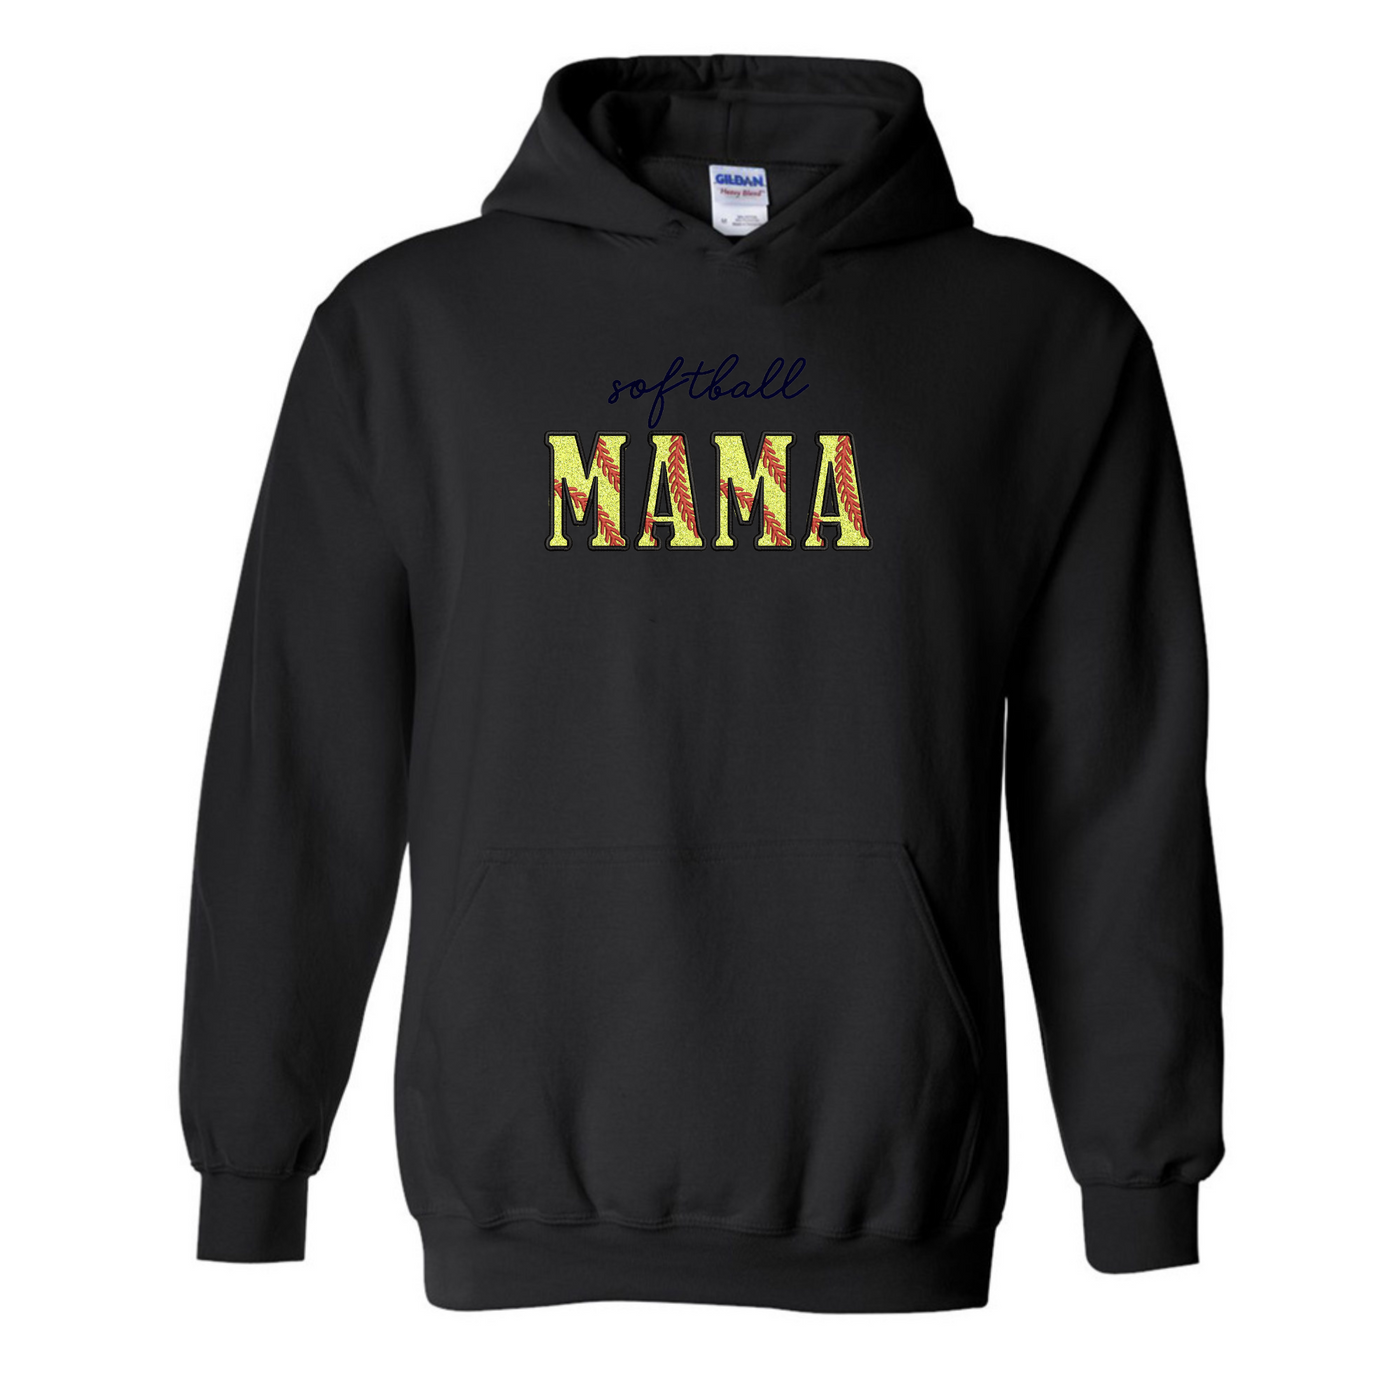 Glitter Embroidery 'Softball Mama/Mom' Hoodie